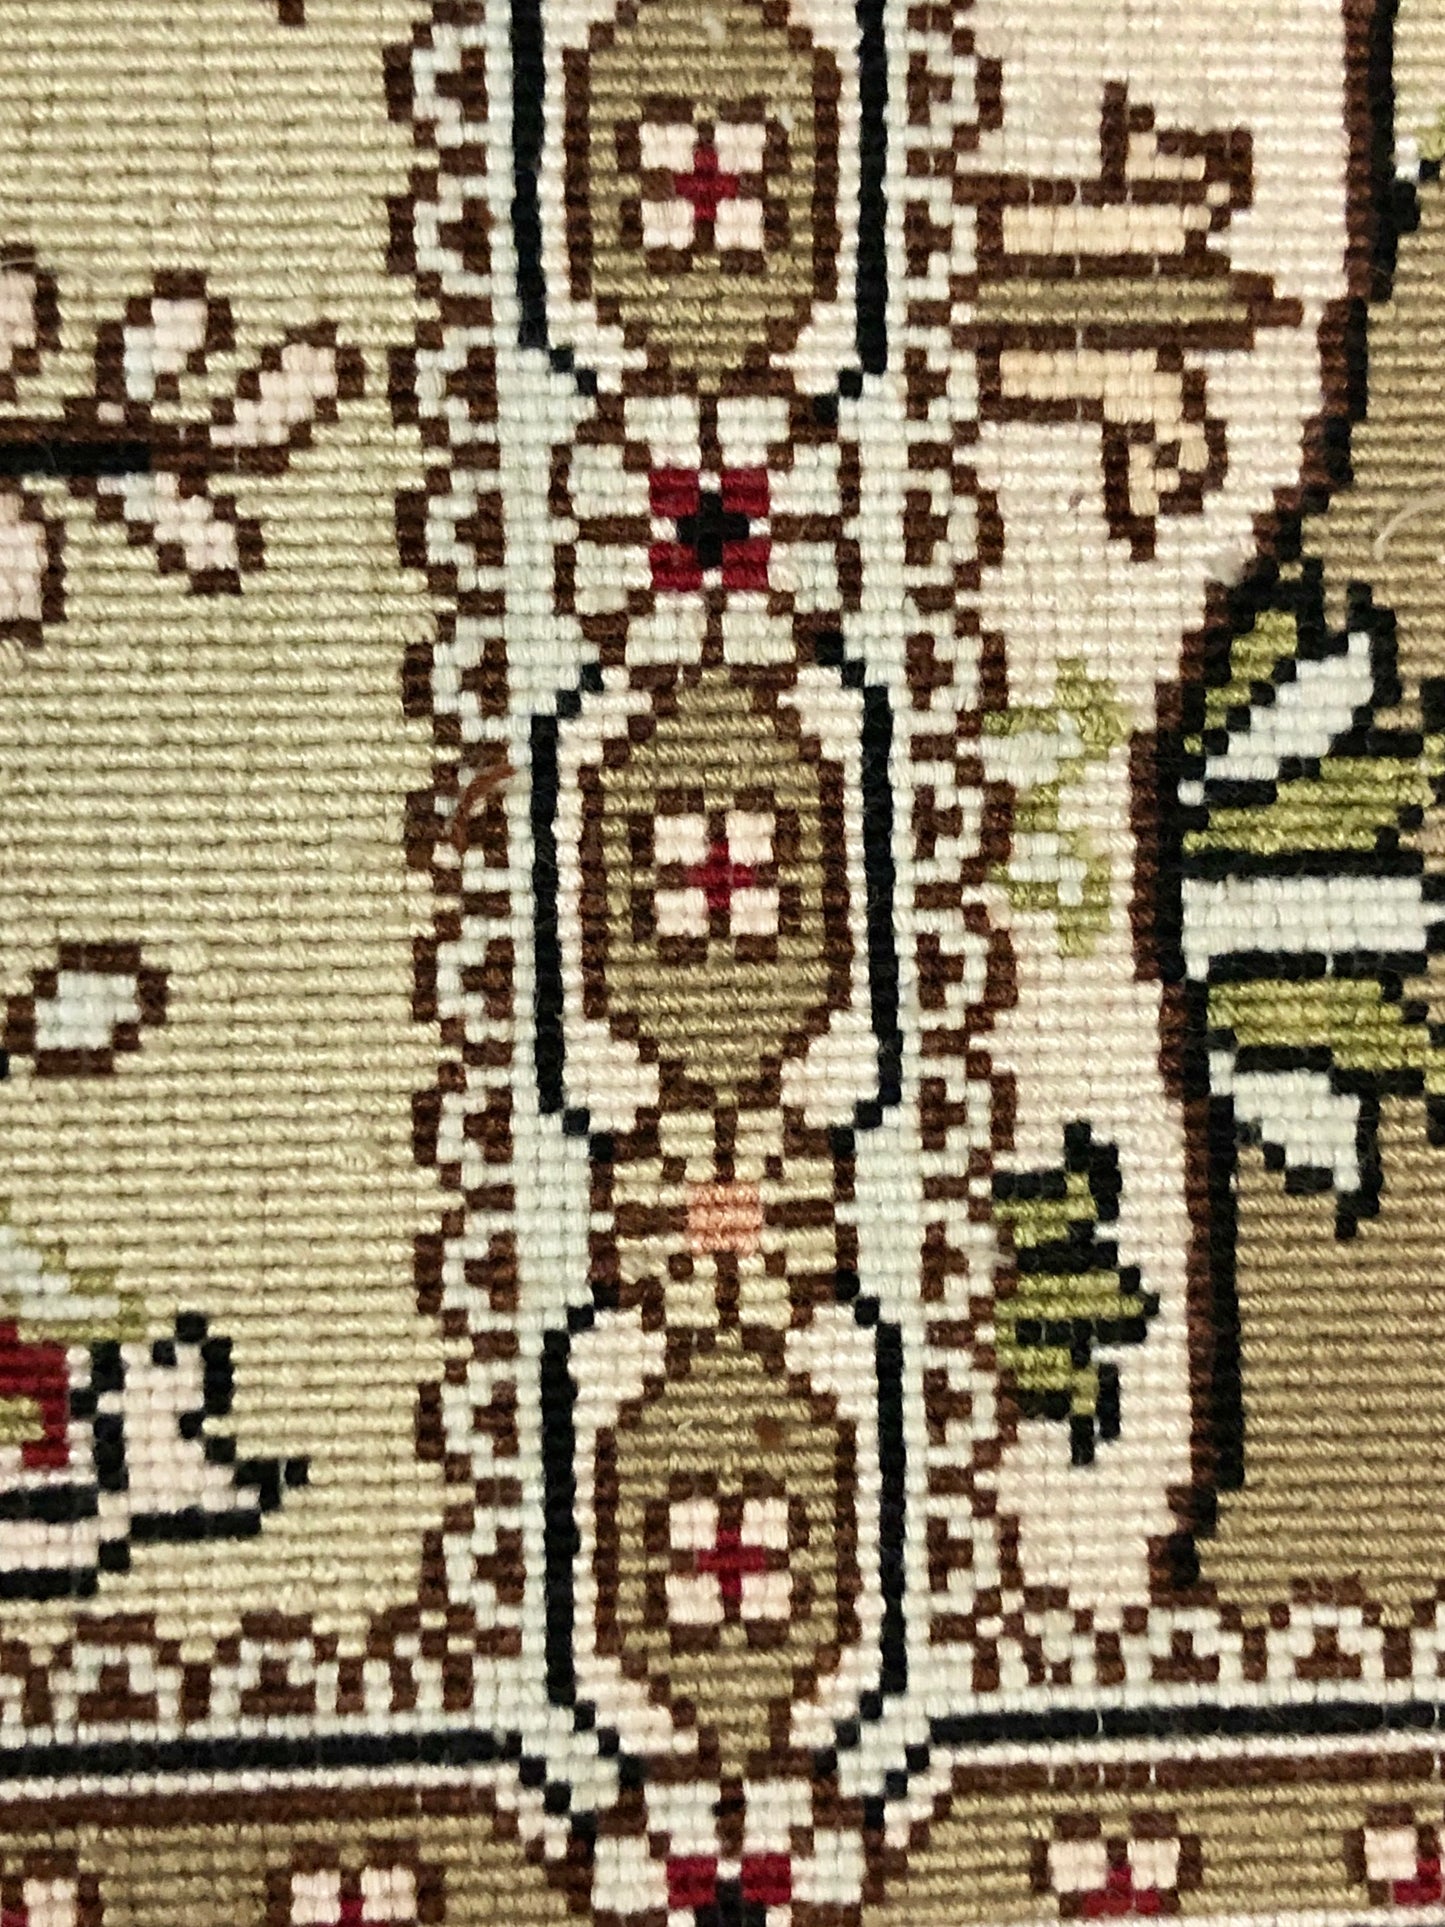 Persian Qom handmade stamped silk on silk carpet.